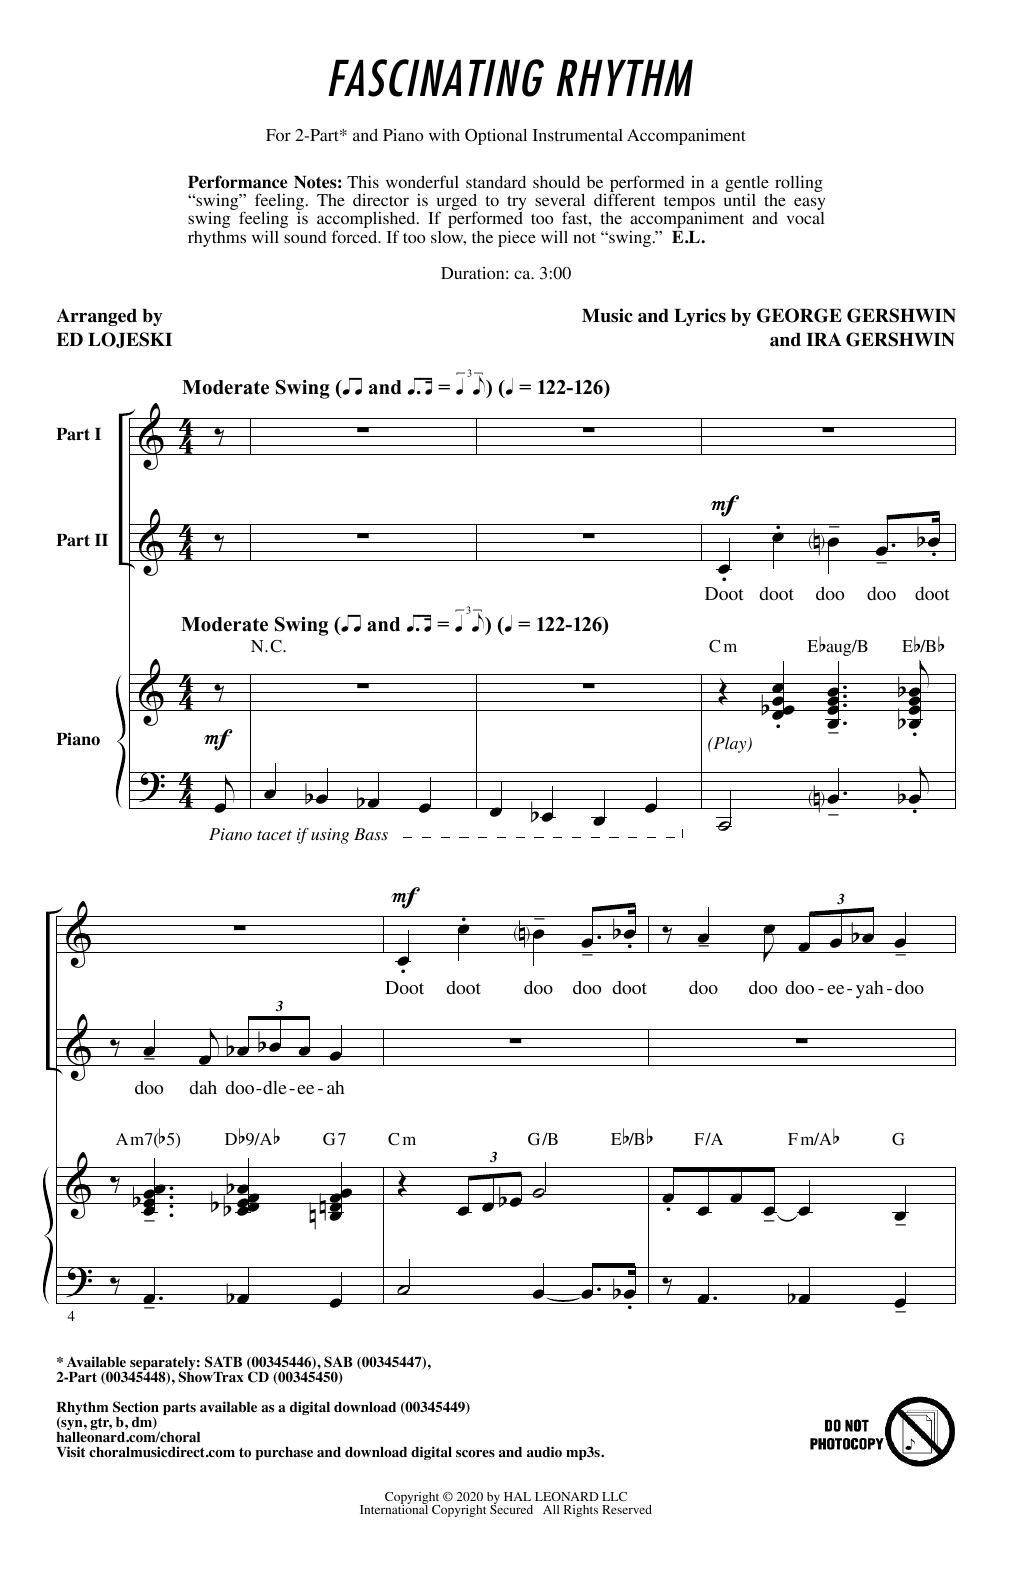 George Gershwin & Ira Gershwin Fascinating Rhythm (from Lady Be Good) (arr. Ed Lojeski) sheet music notes and chords arranged for SATB Choir